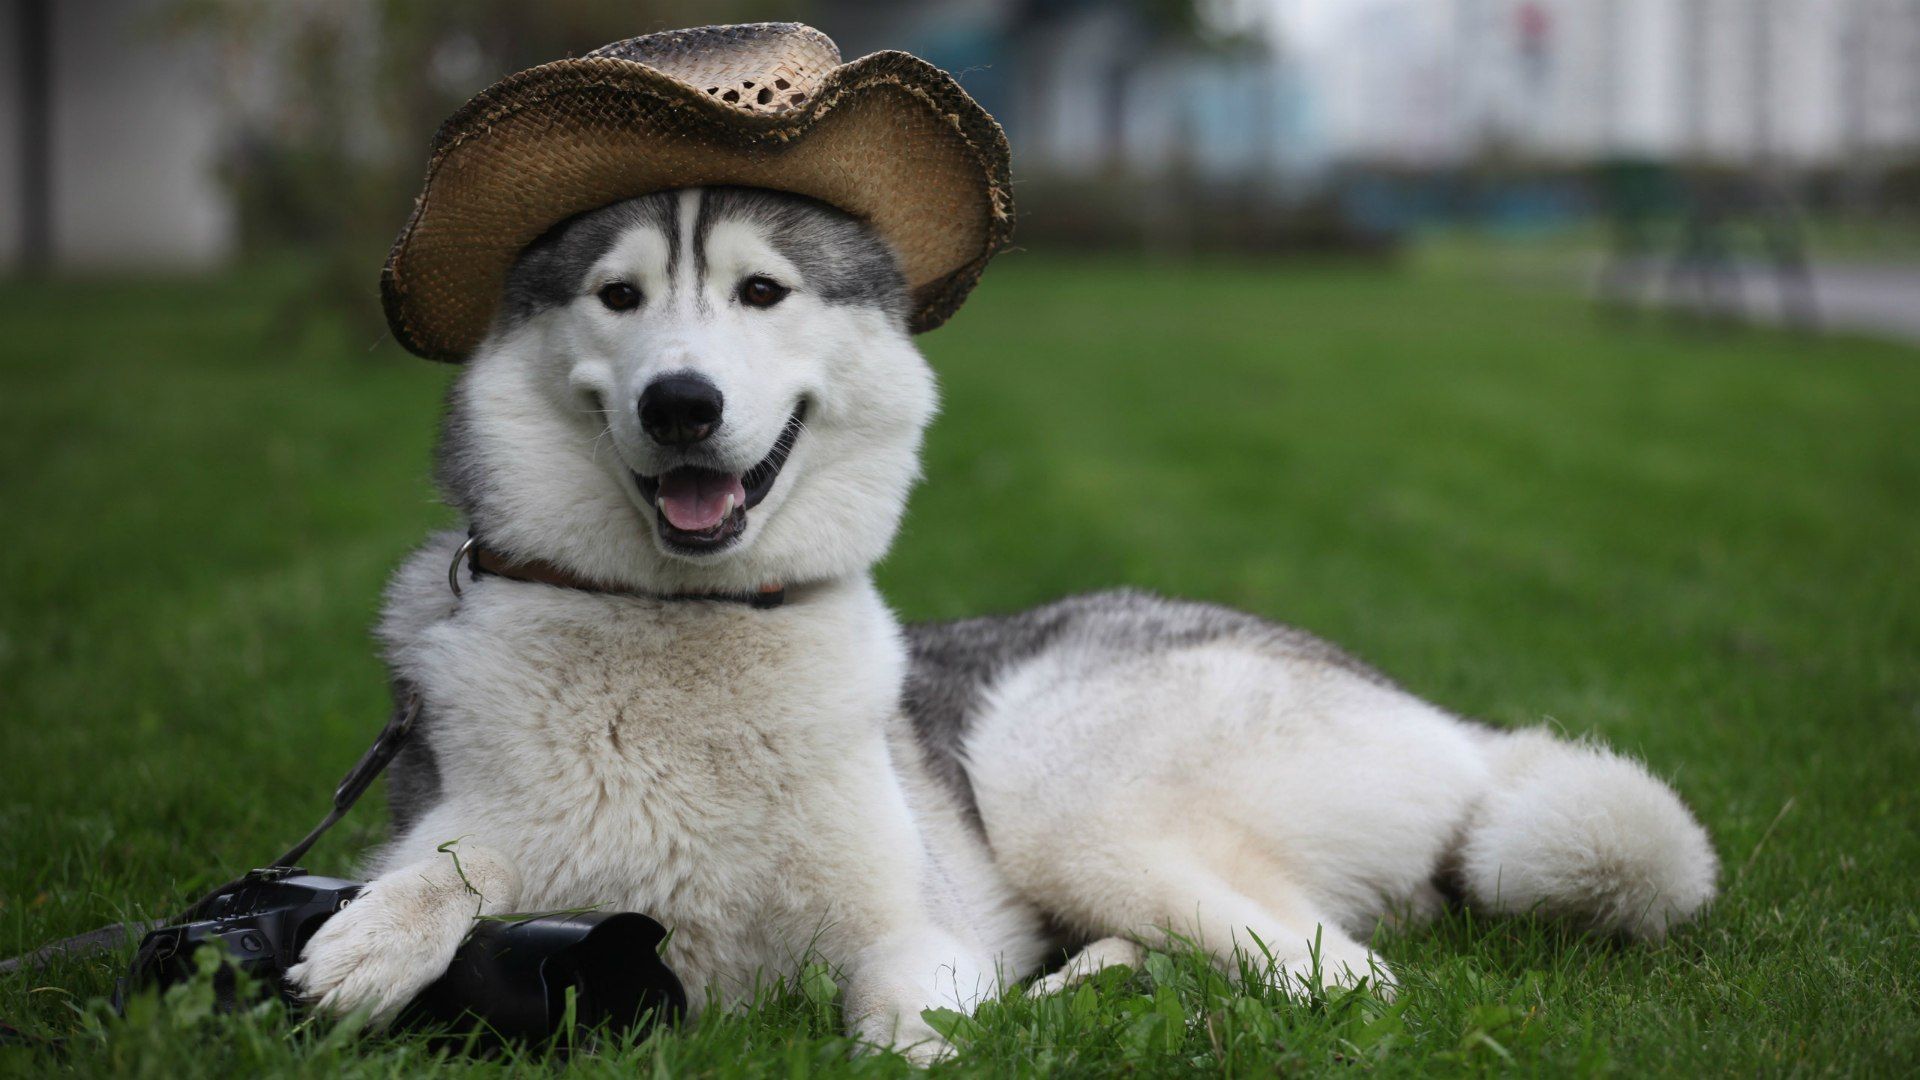 عکس نژاد سگ مالاموت یا alaskan malamute با کلاه